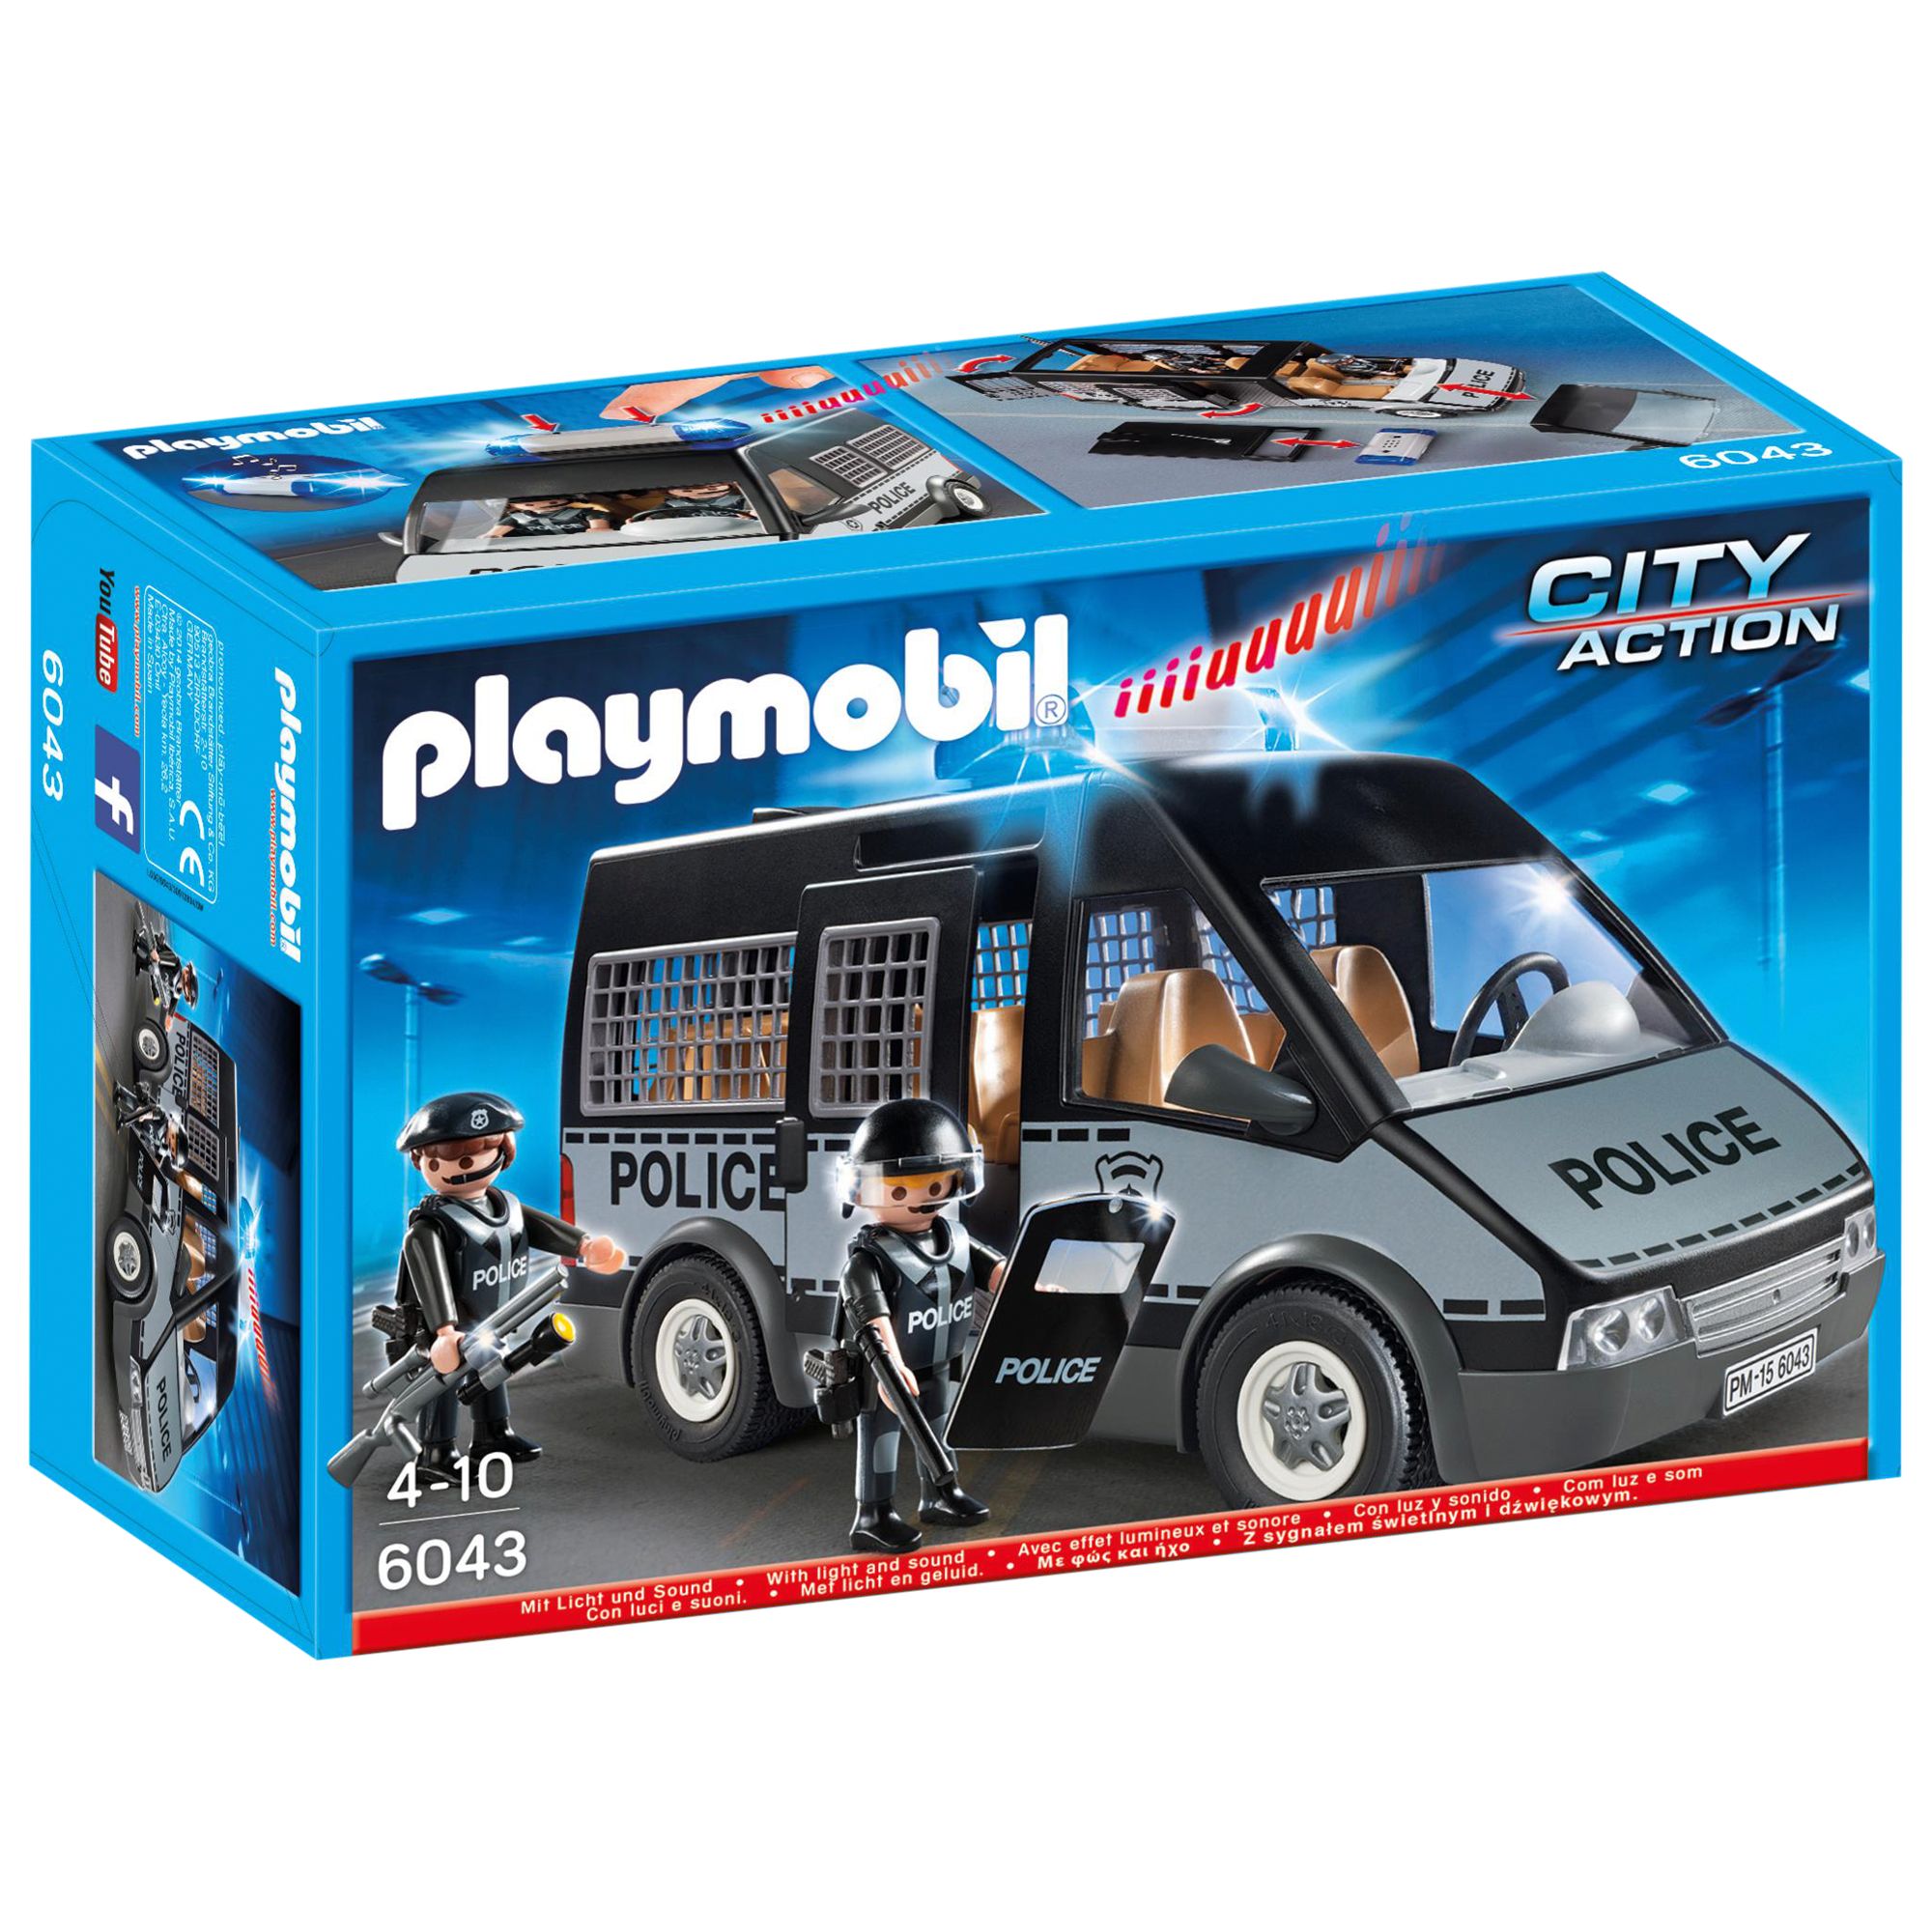 Playmobil City Action Police Van